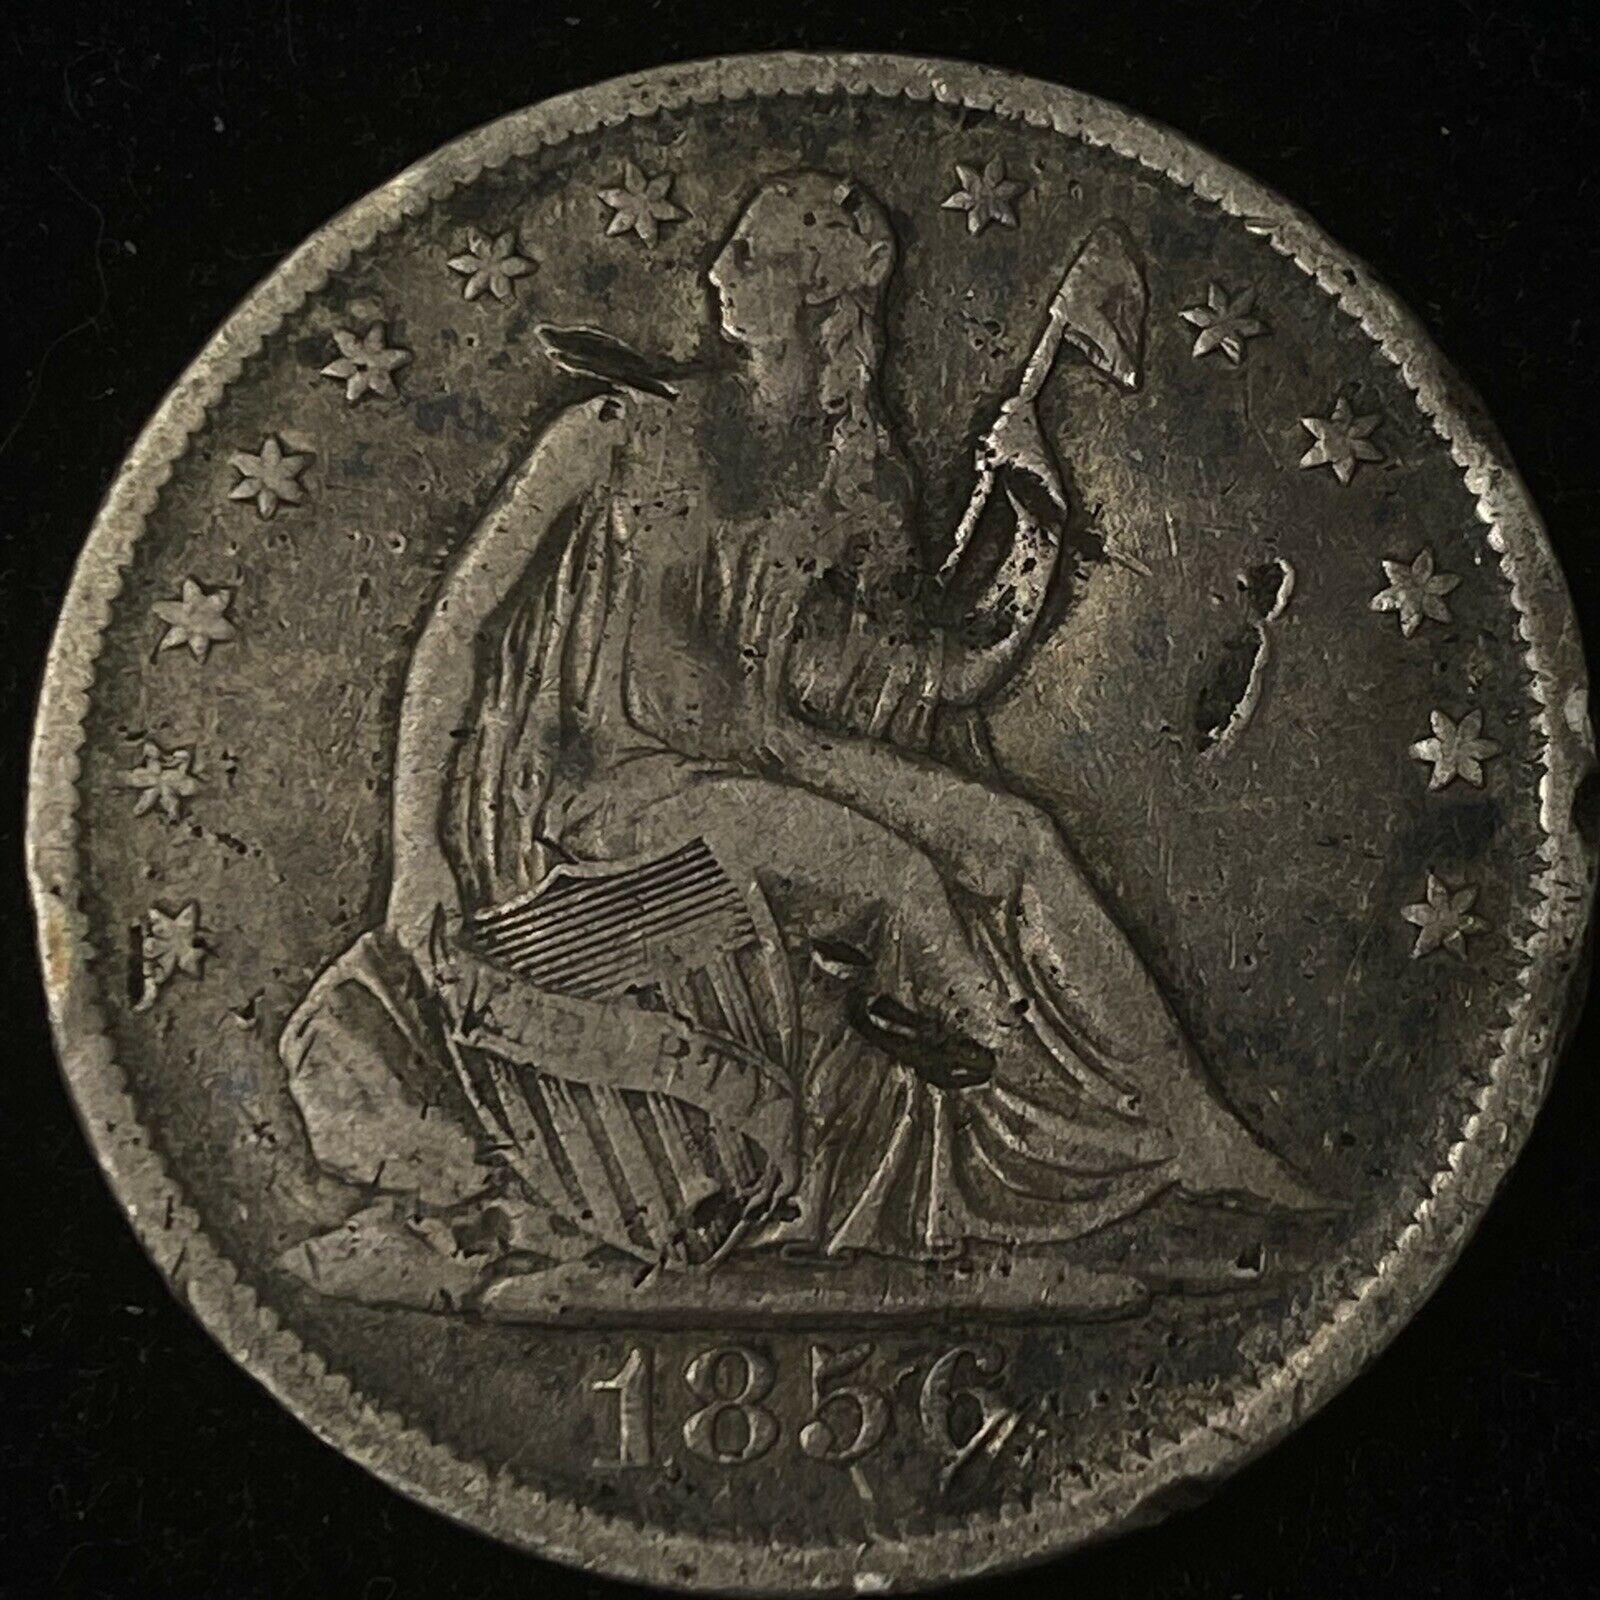 1856 Seated Liberty Half Dollar - Fine Details